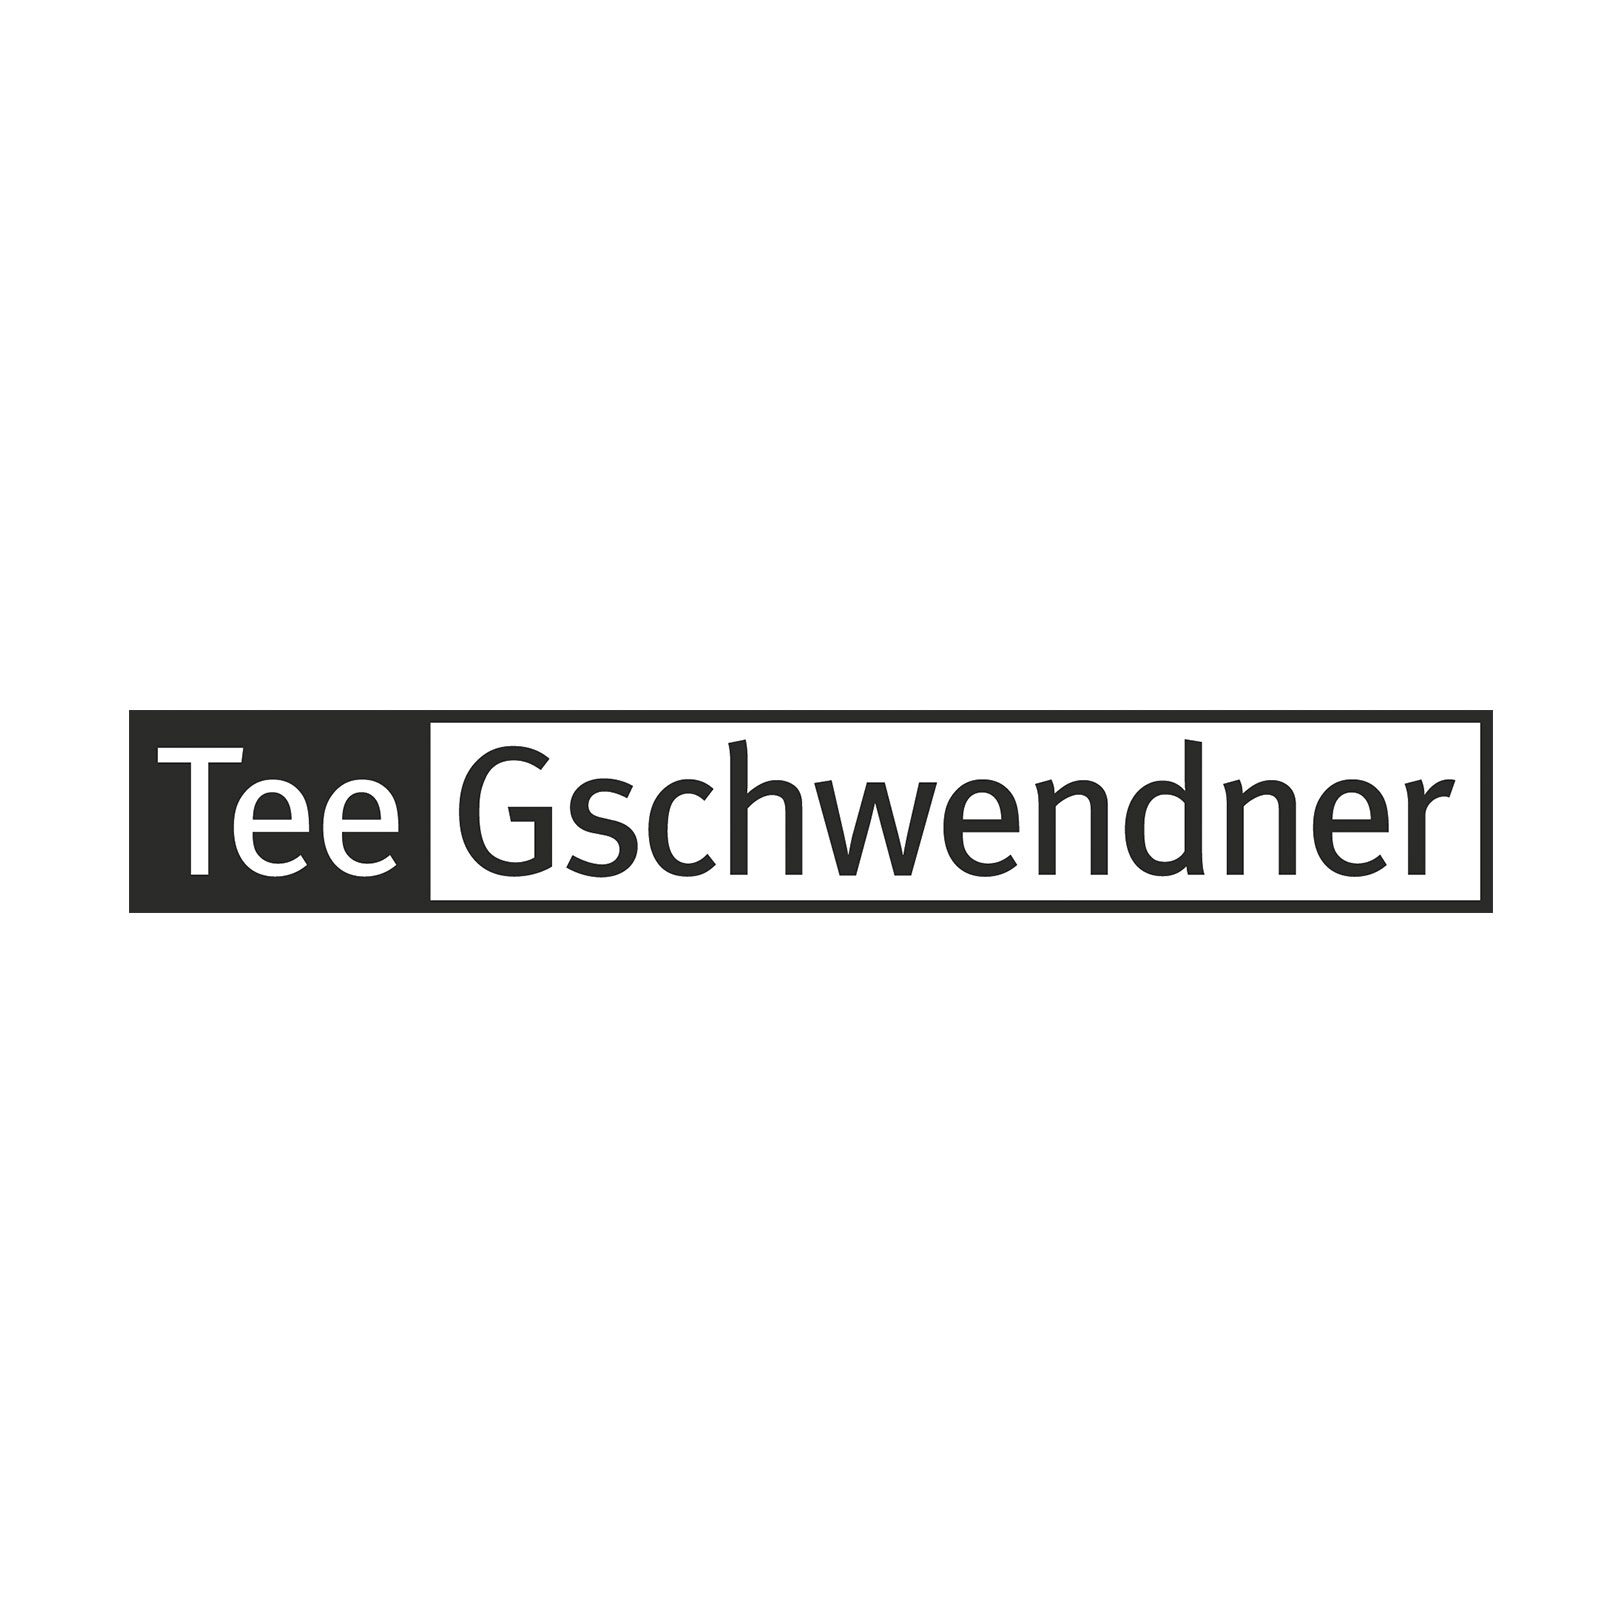 TeeGschwendner GmbH